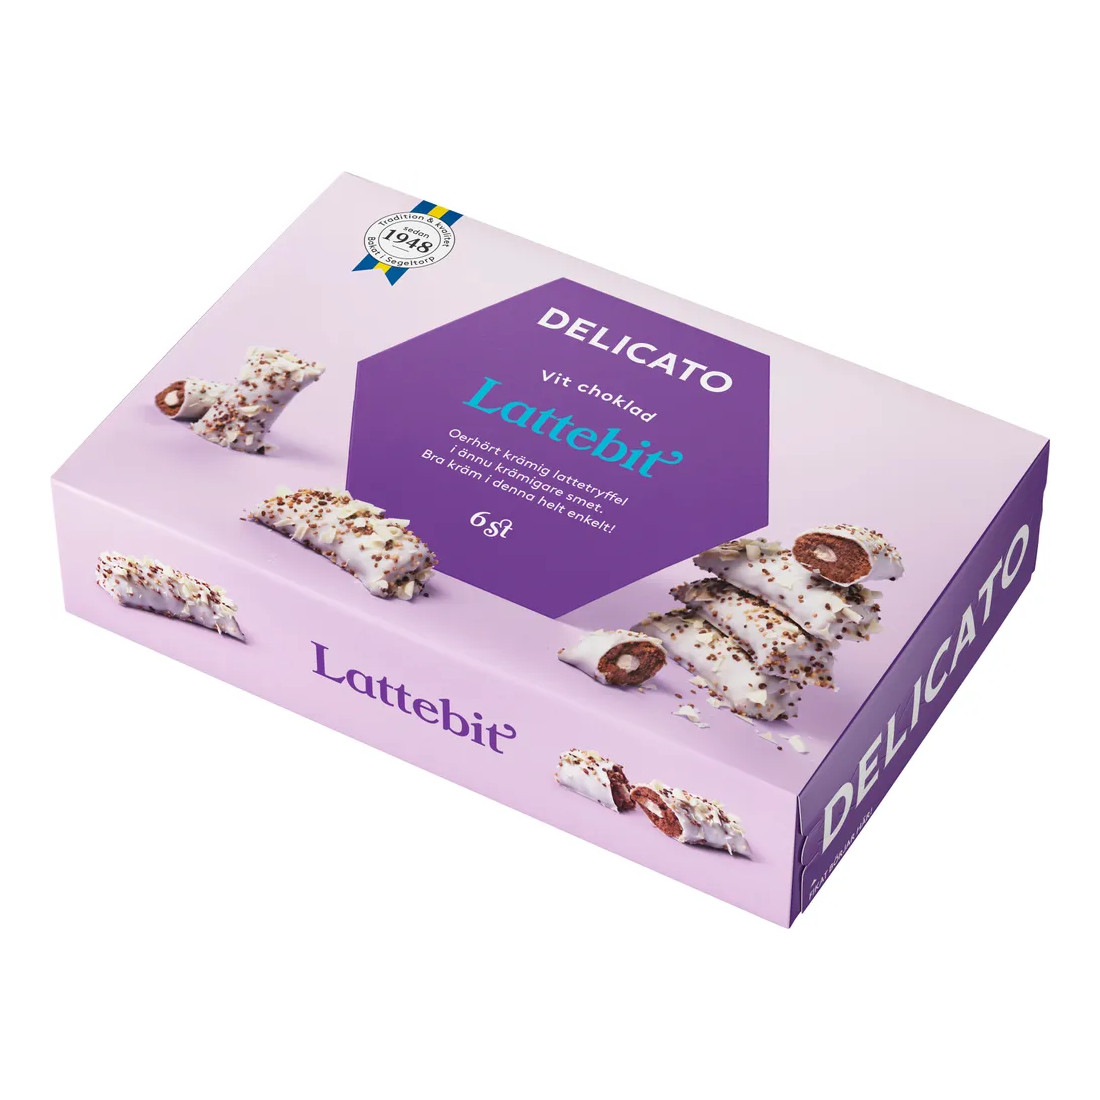 Delicato Lattebit 6 pack - 180 grams